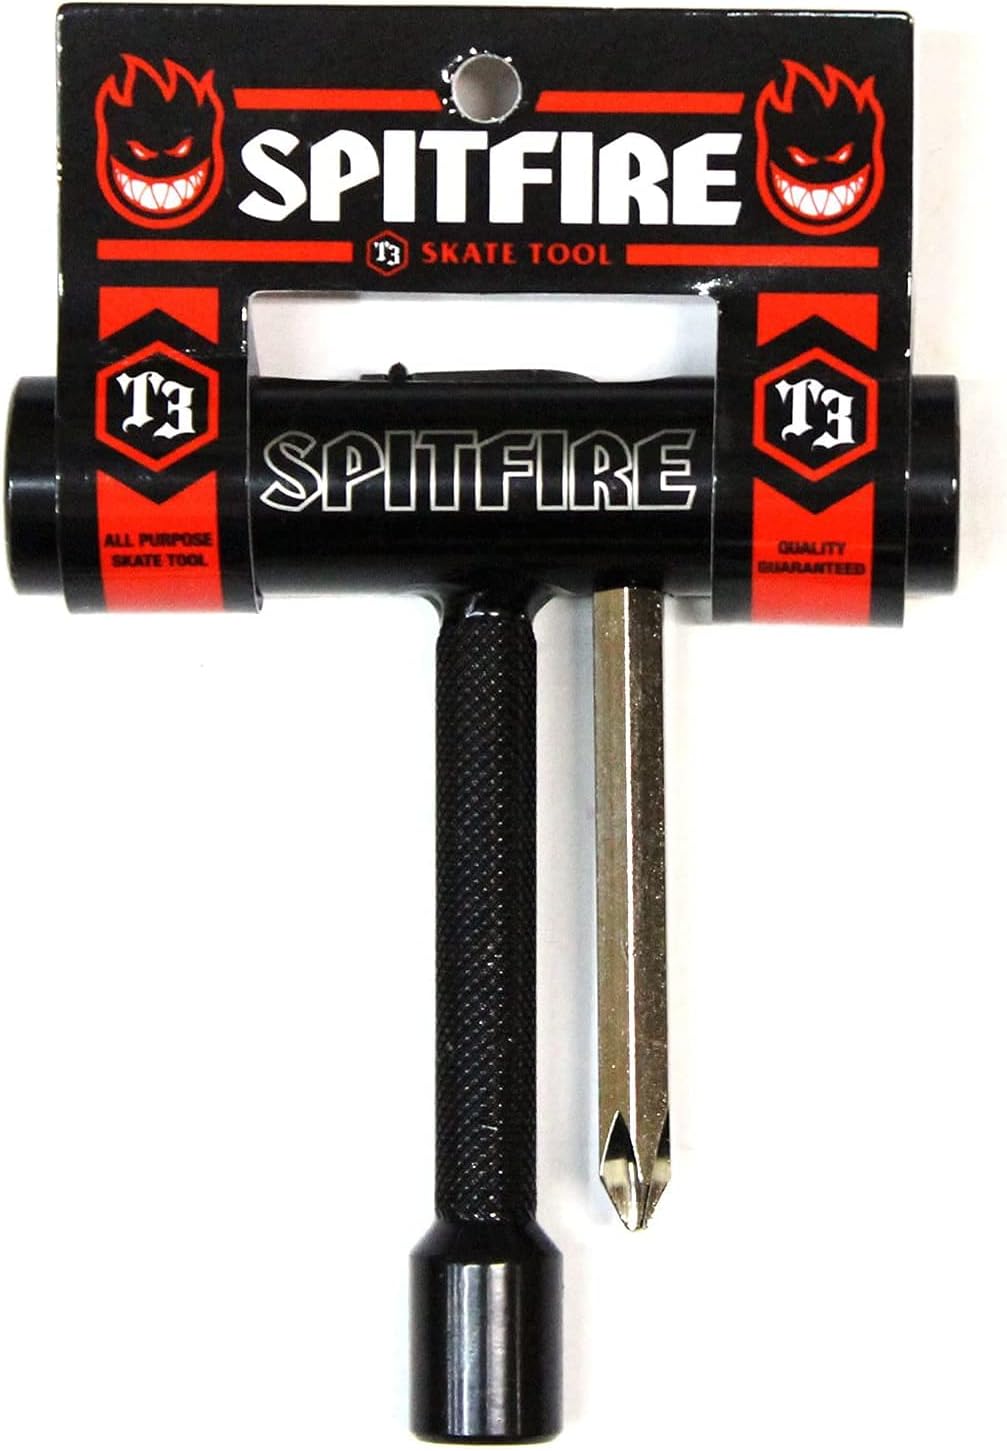 Spitfire T3 Skate Tool Sunny Smith LLC